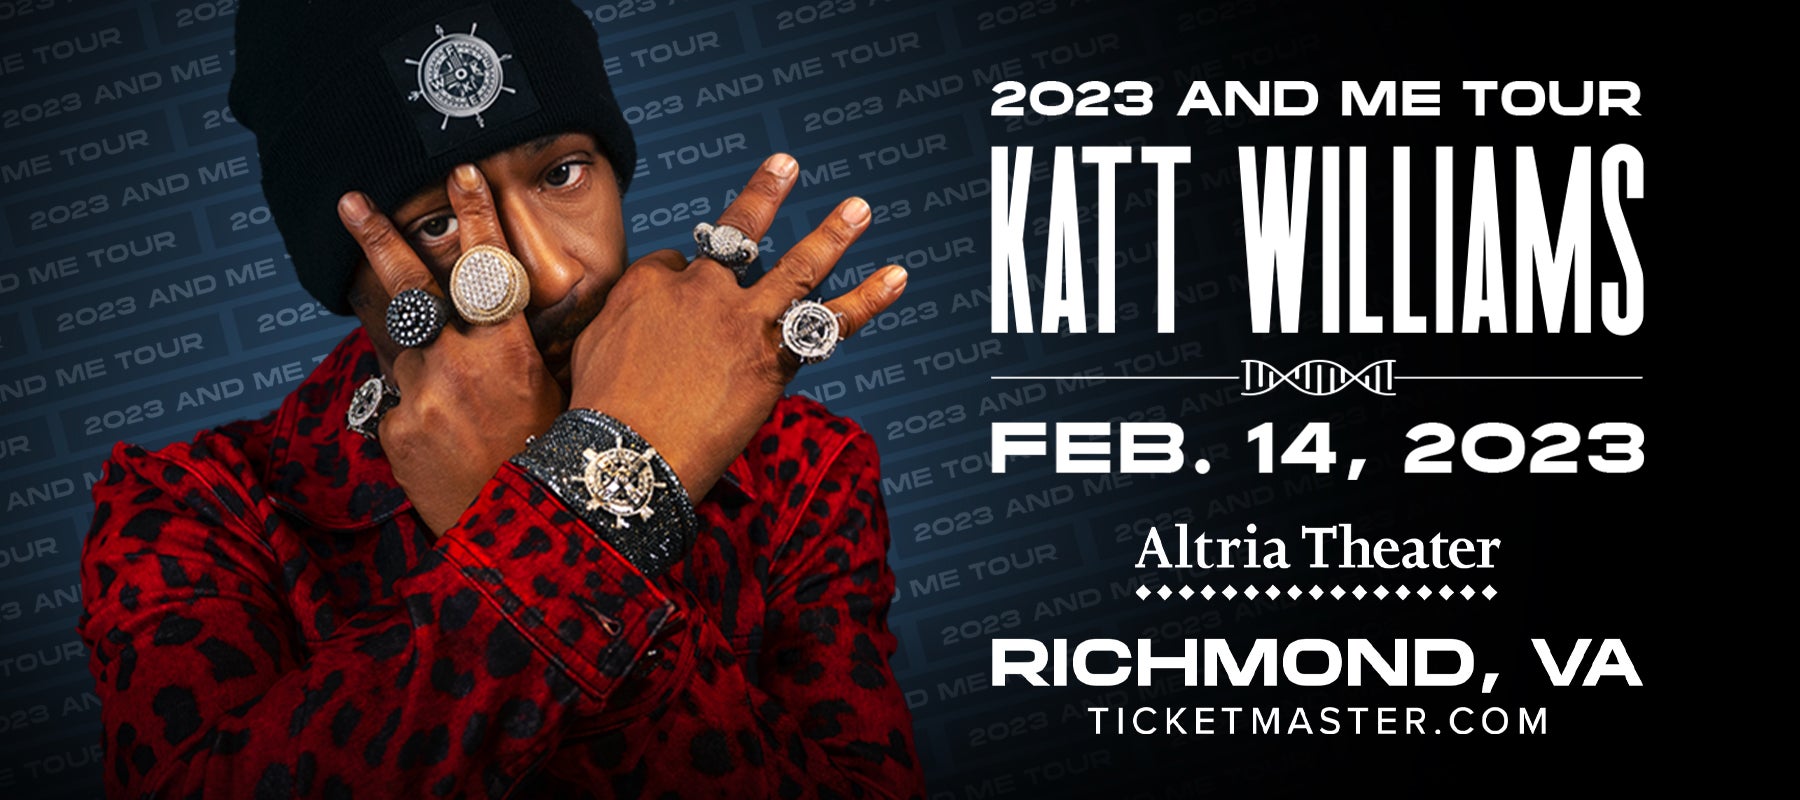 KATT WILLIAMS ANNOUNCES 23 AND ME TOUR Altria Theater Official Website